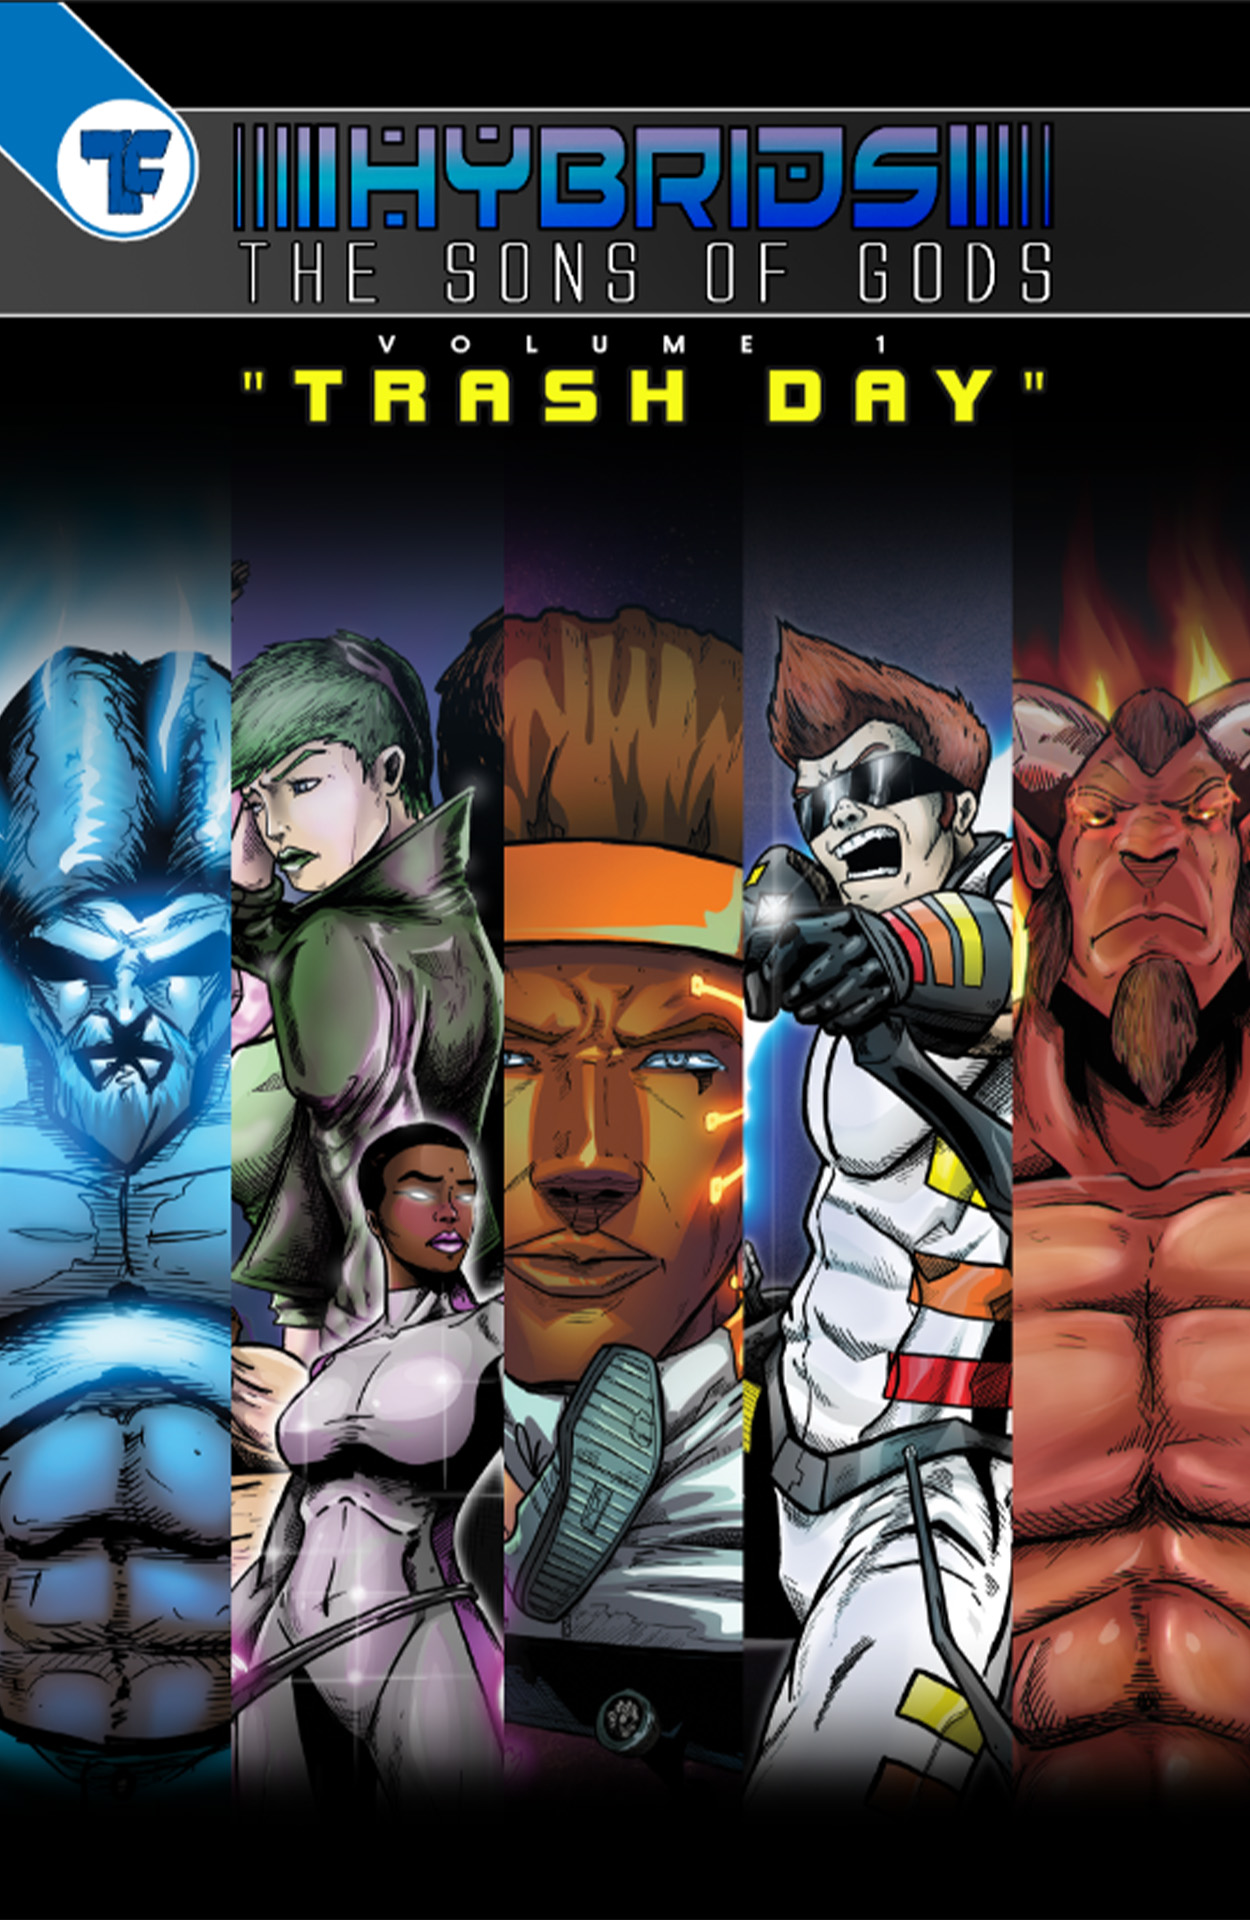 Hybrids: The Sons of Gods-Trash Day Graphic Novel